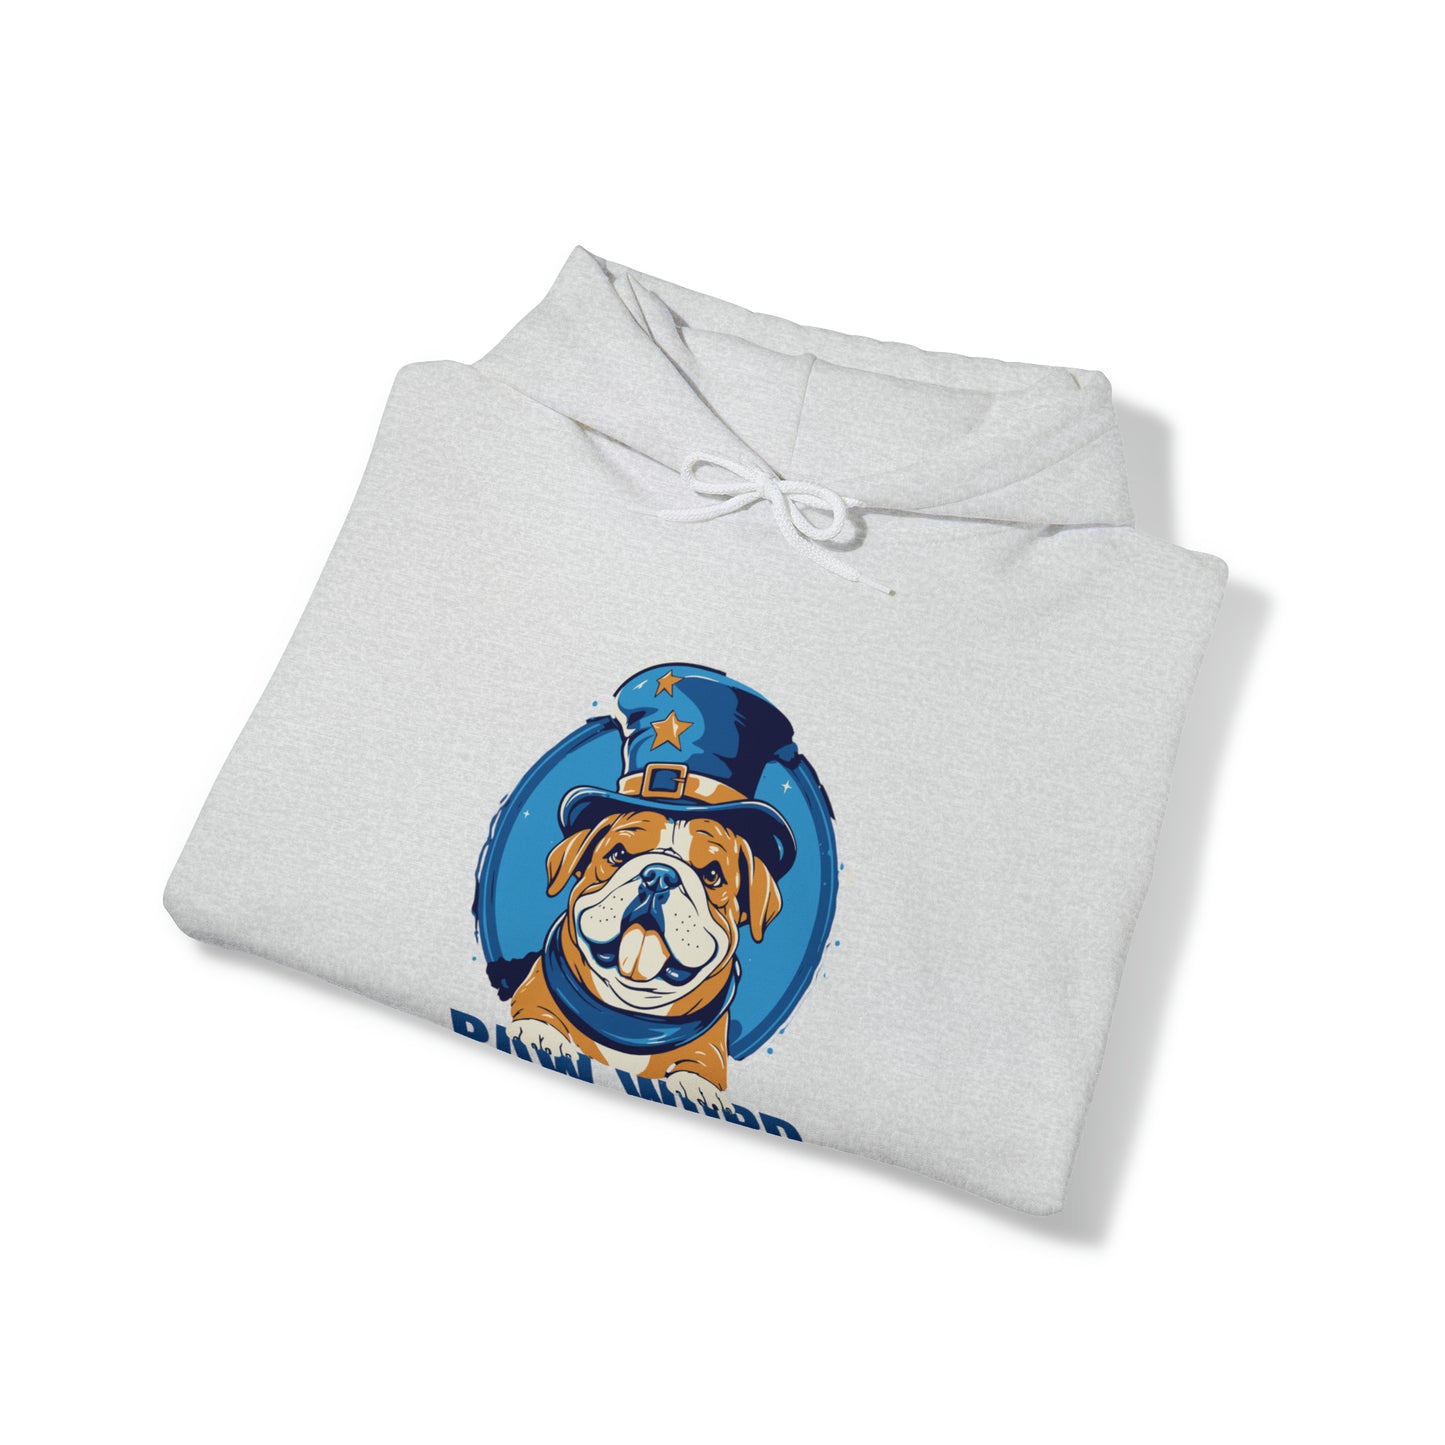 PawWord Legendary Pets - Logo Branded Unisex Heavy Blend™ Hooded Sweatshirt